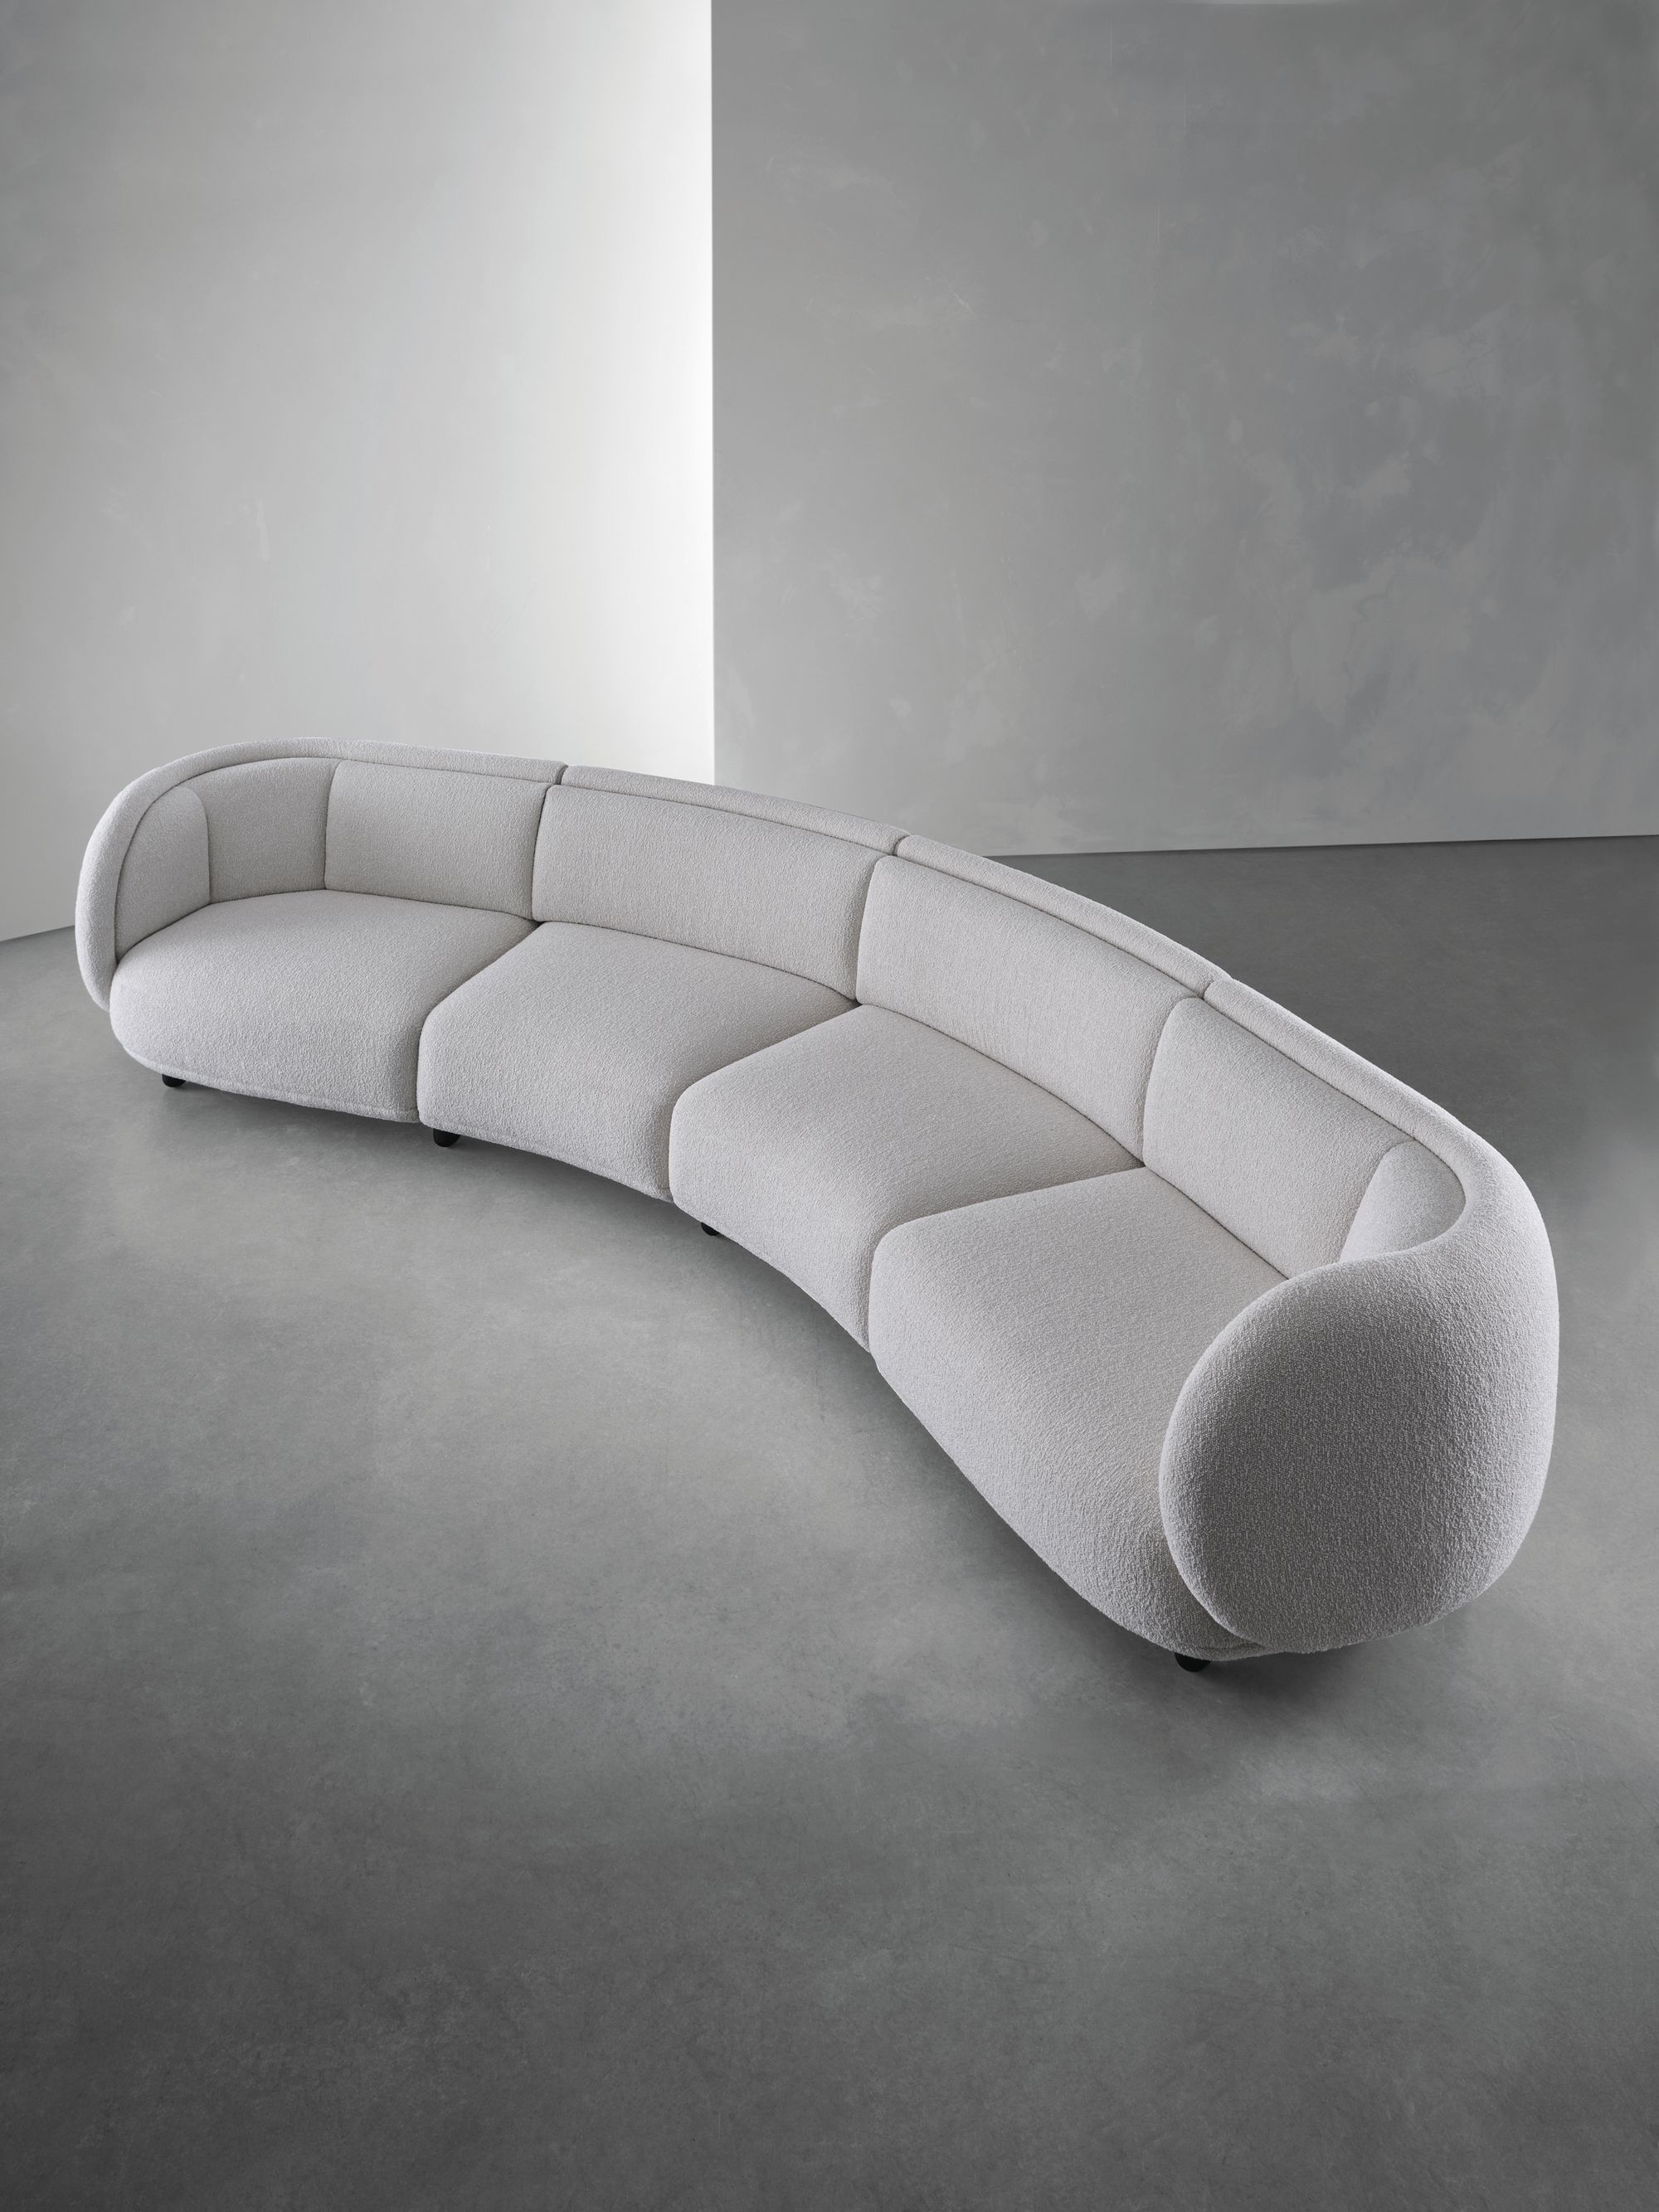 nuevo sofá de diseño, sofá modular blanco, sofá Vuelta de Wittmann